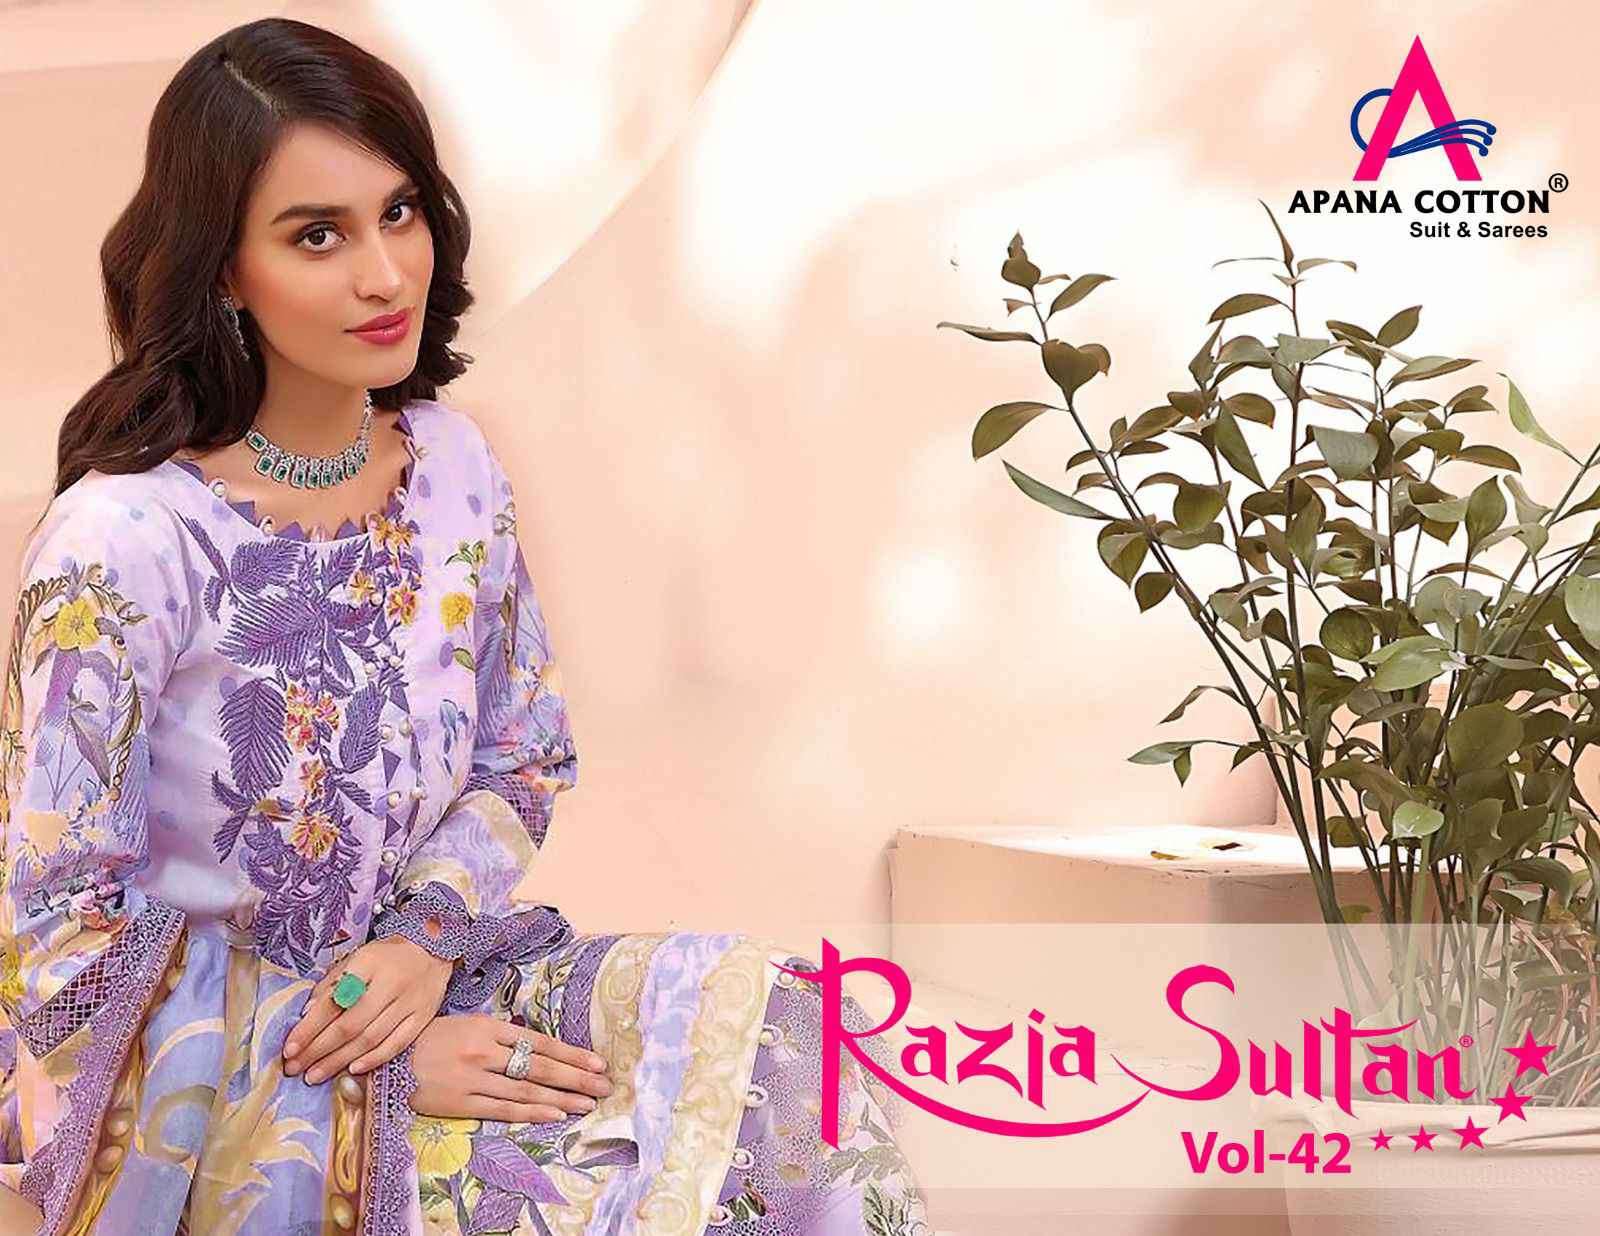 Apana Cotton Razia Sultan Vol 42 Karachi Style Cotton Dress Material Exporter